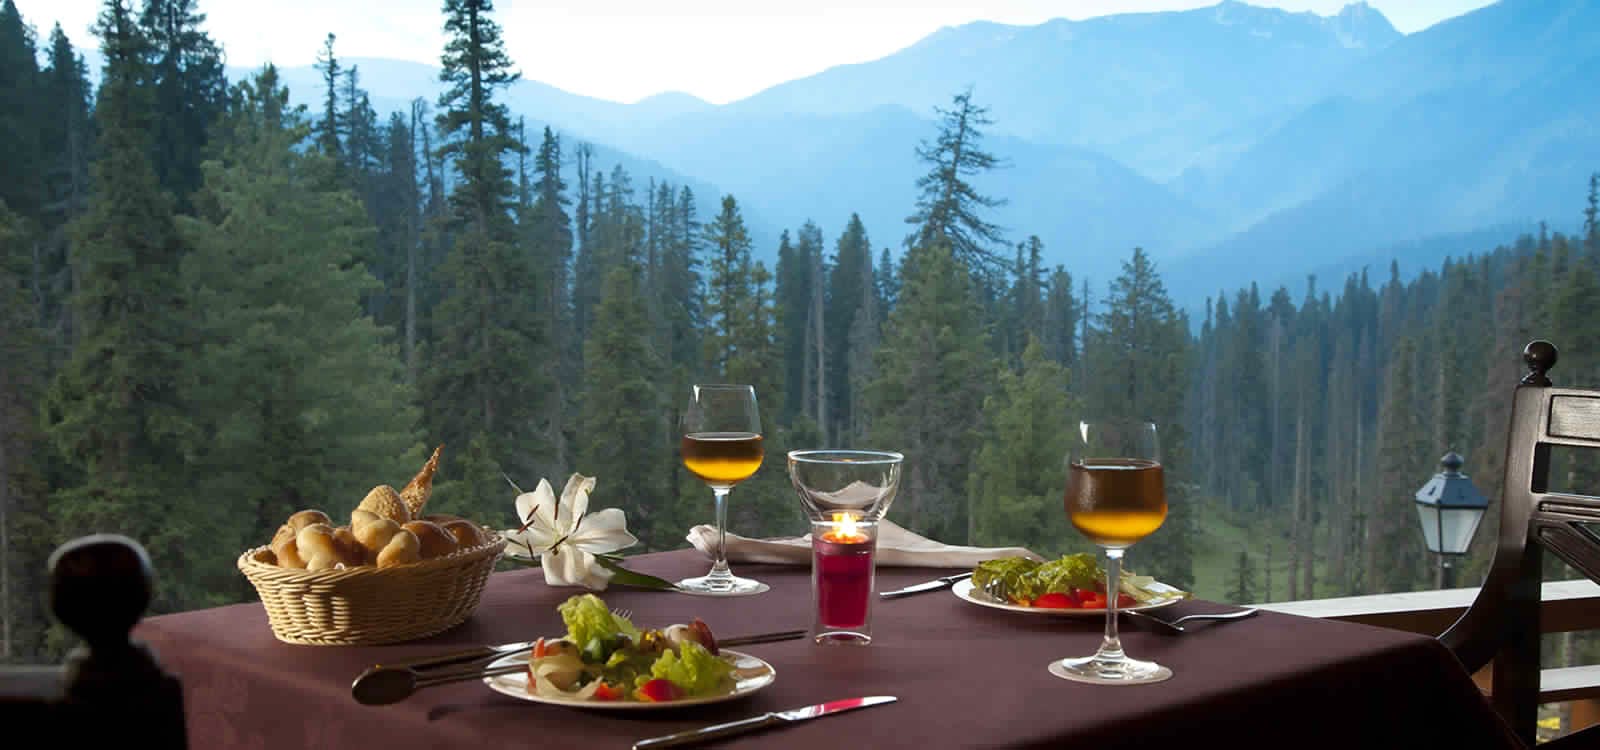 Mountain,Landscape,Meal,Tree,Mountain range,Drink,Vacation,Glass,Hill station,Breakfast